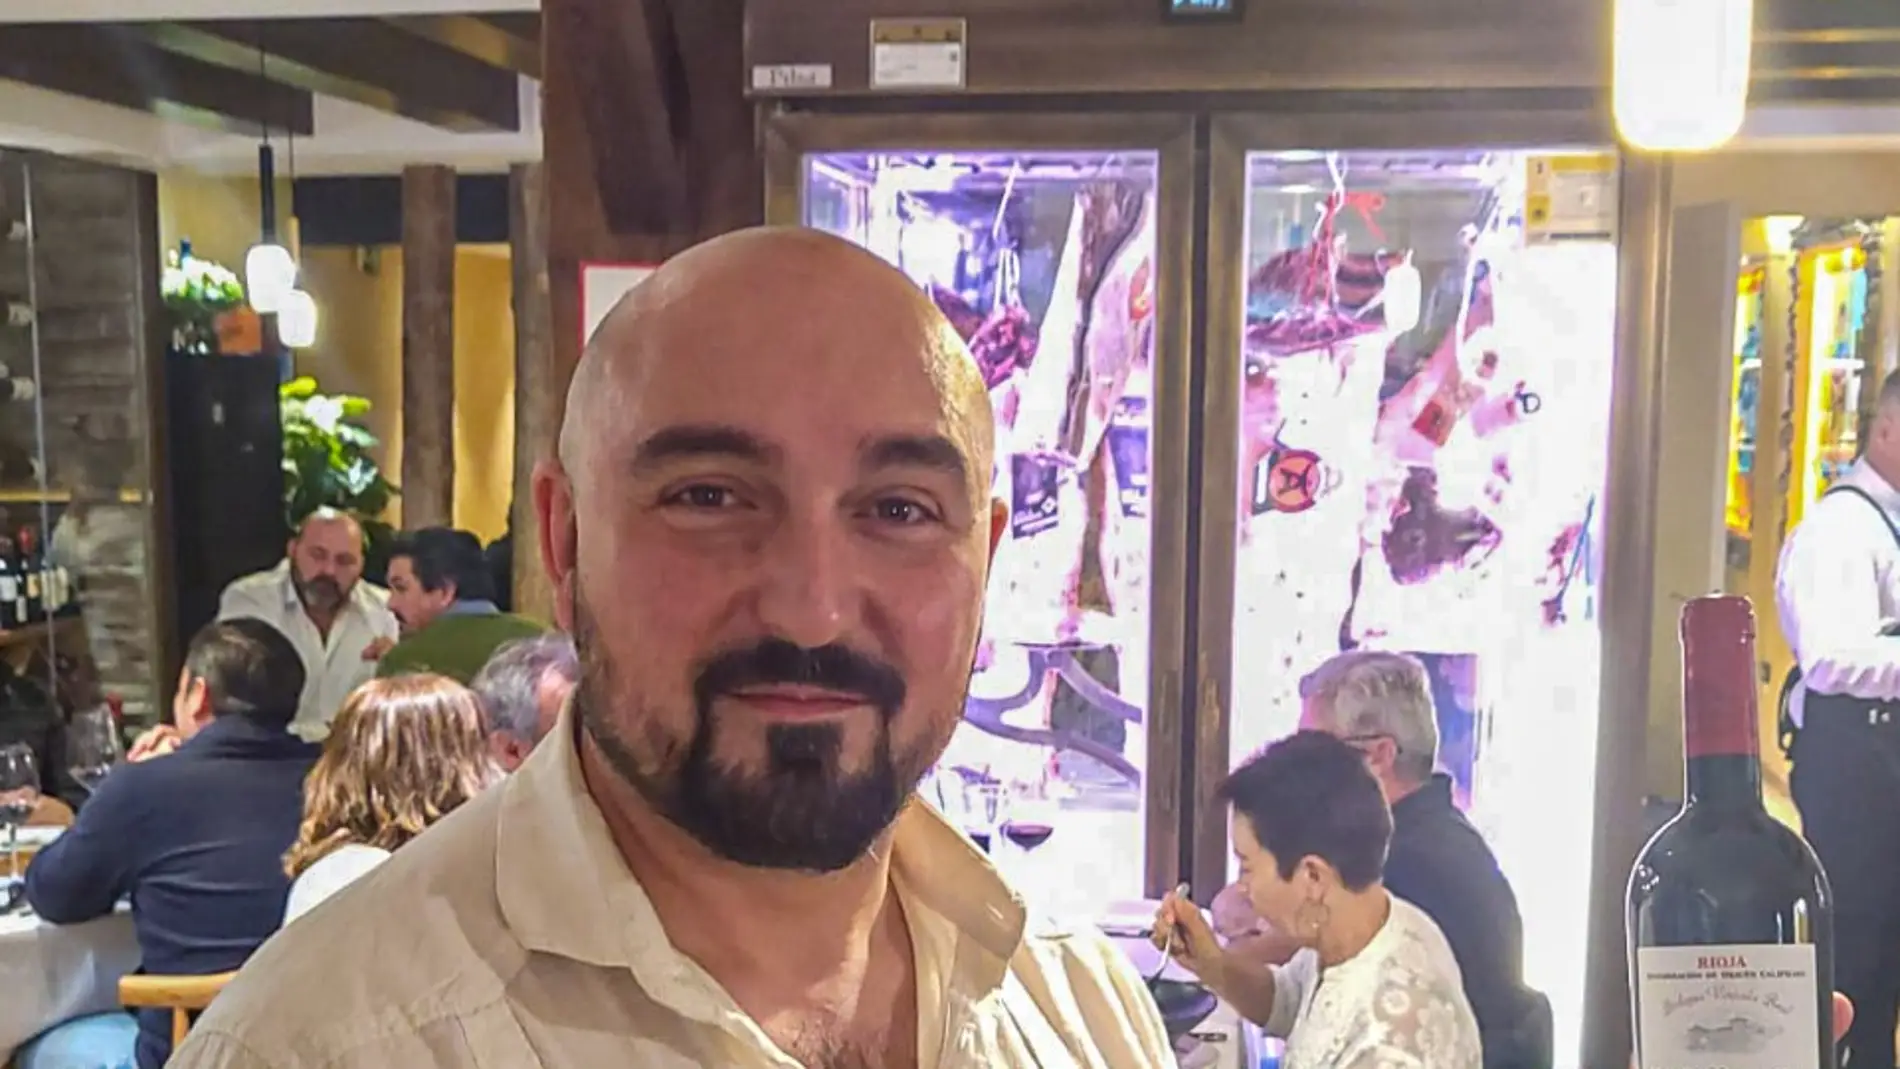 Asador Iñaki celebra Jornadas Gastronómicas de la Caza